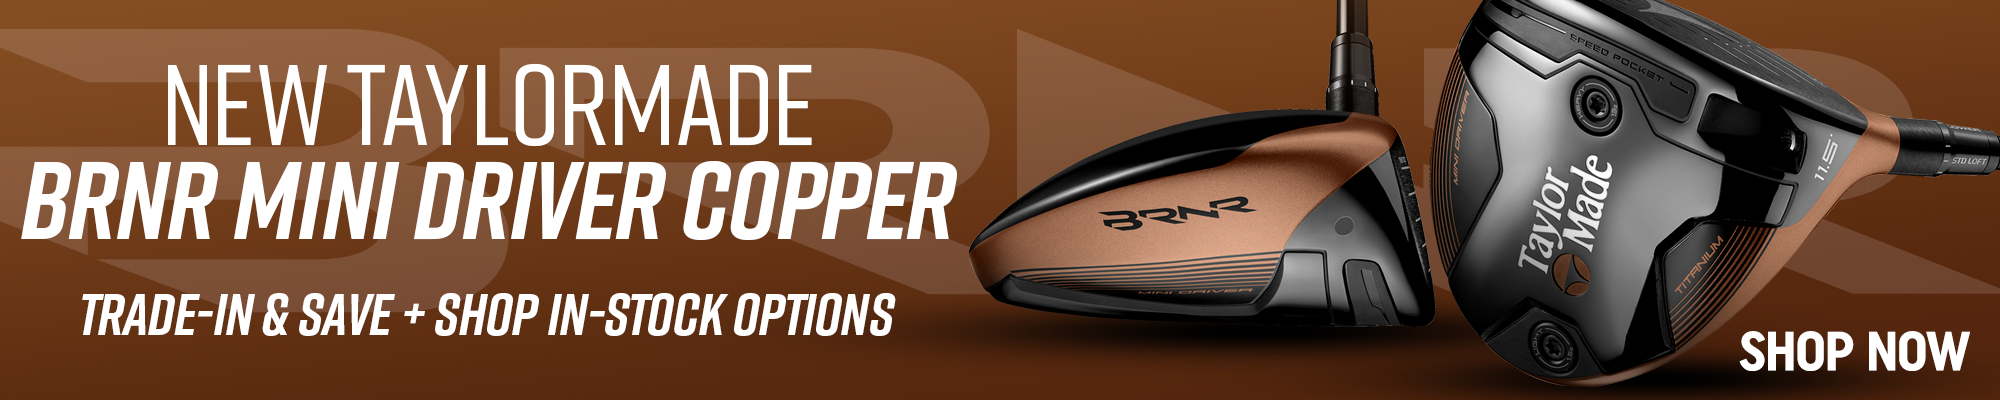 New TaylorMade BRNR Mini Driver Copper